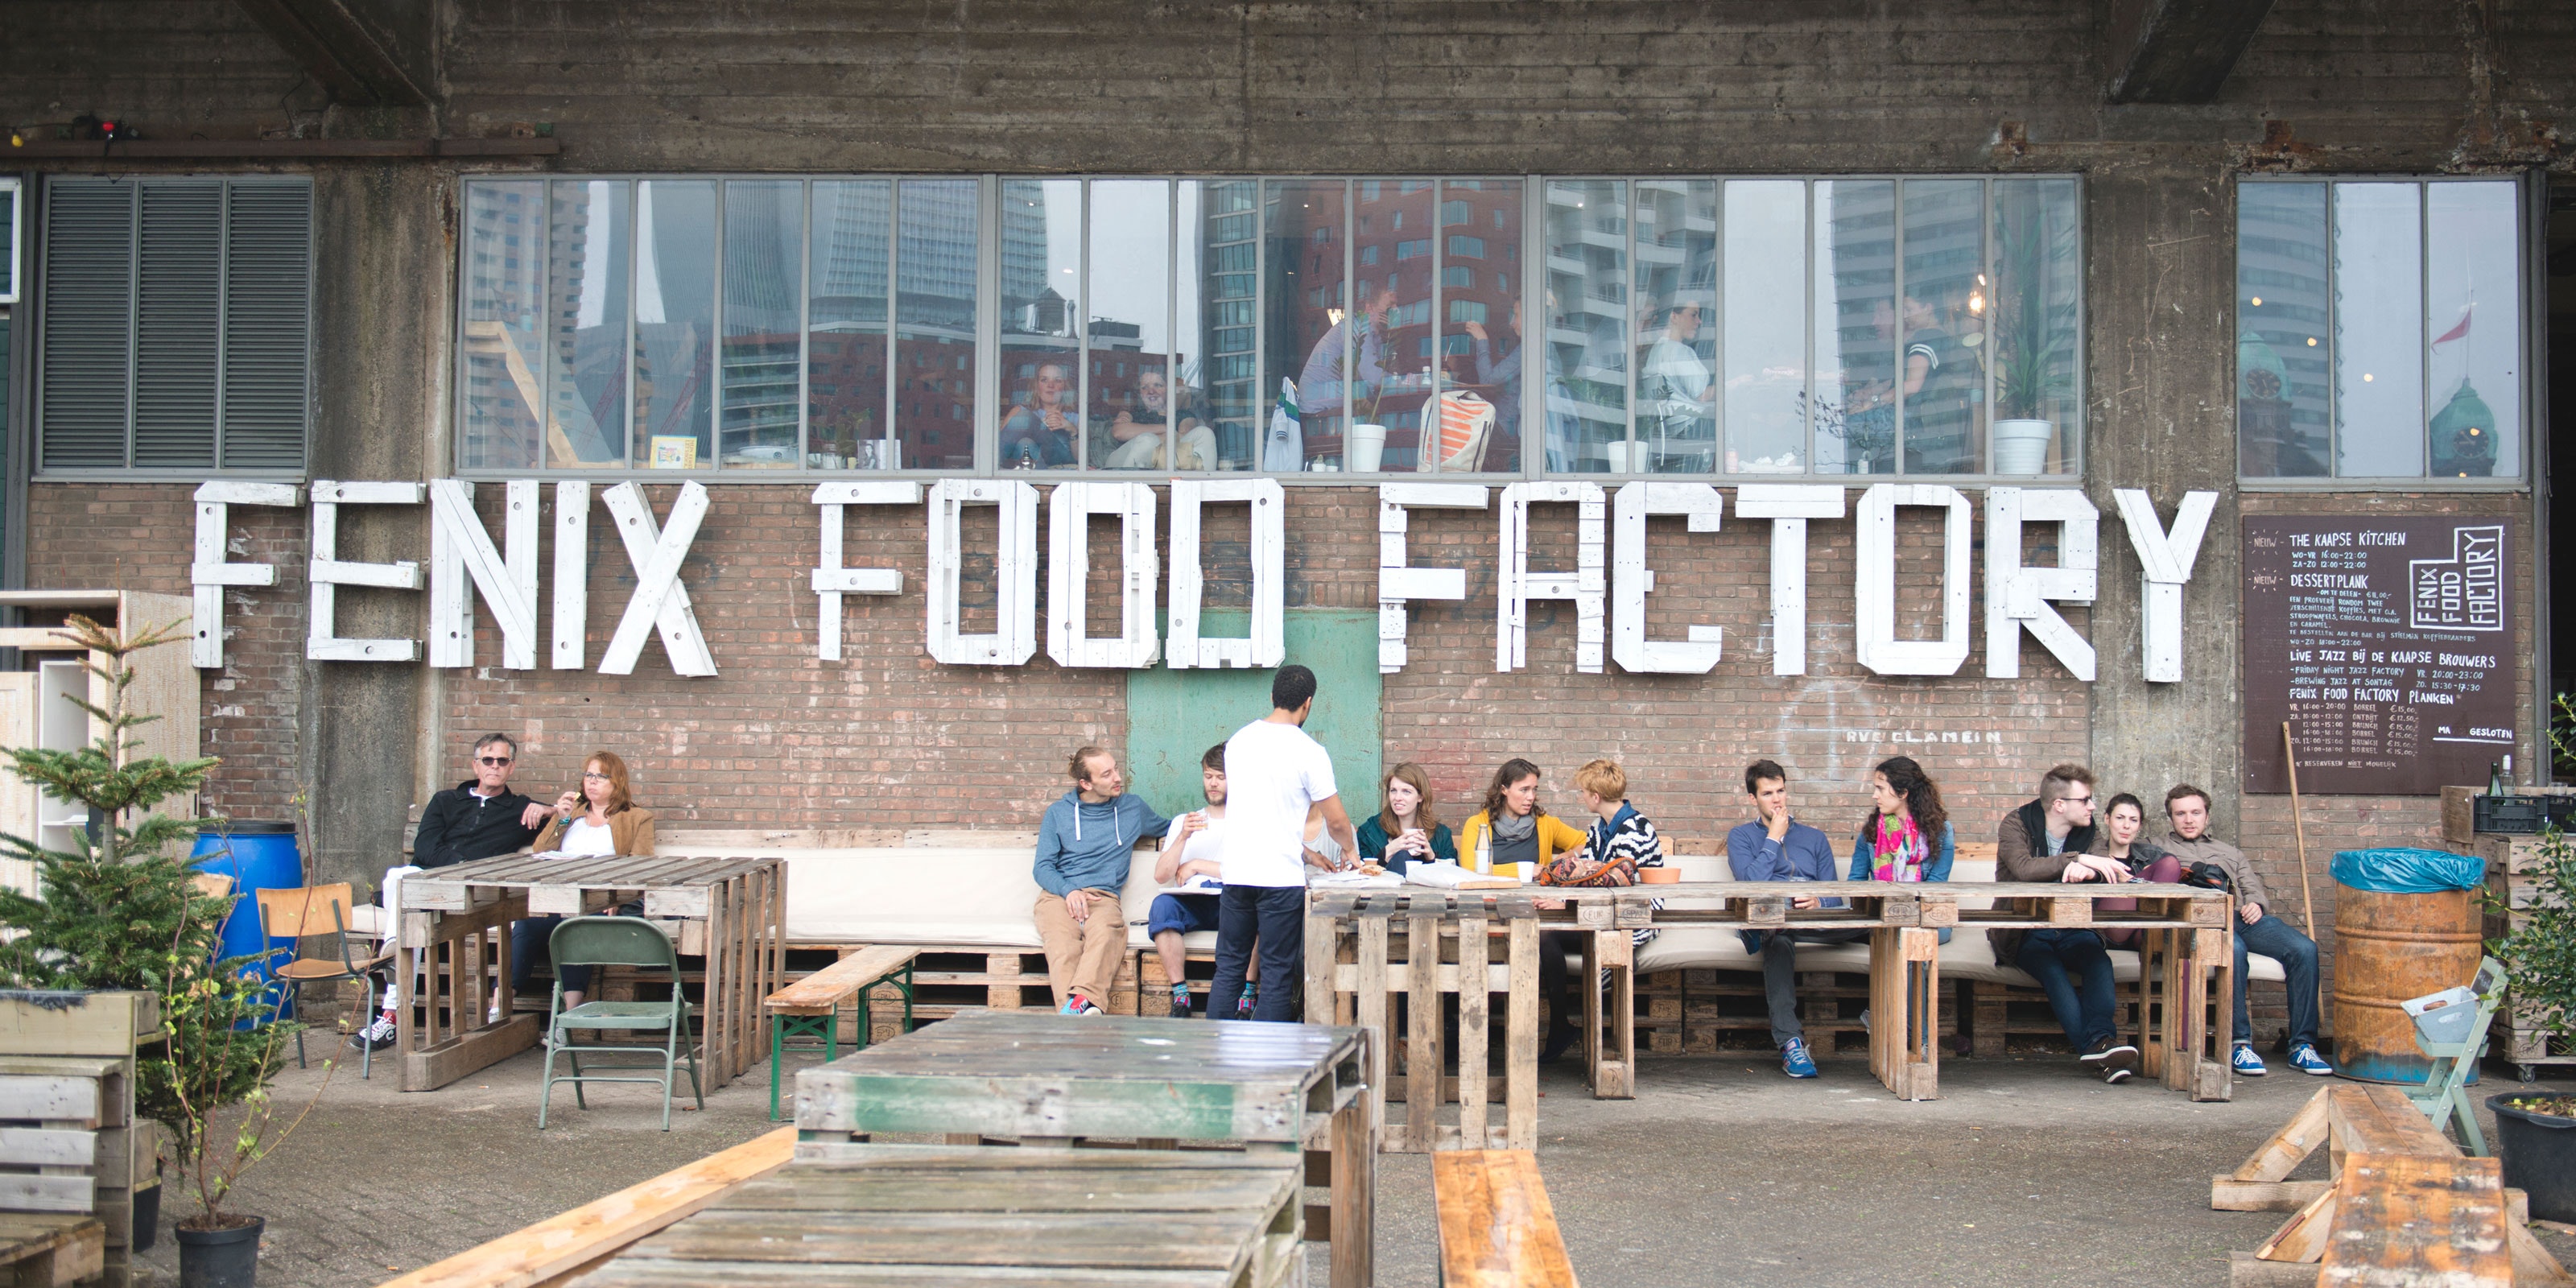 hotspots in rotterdam, fenix food factory